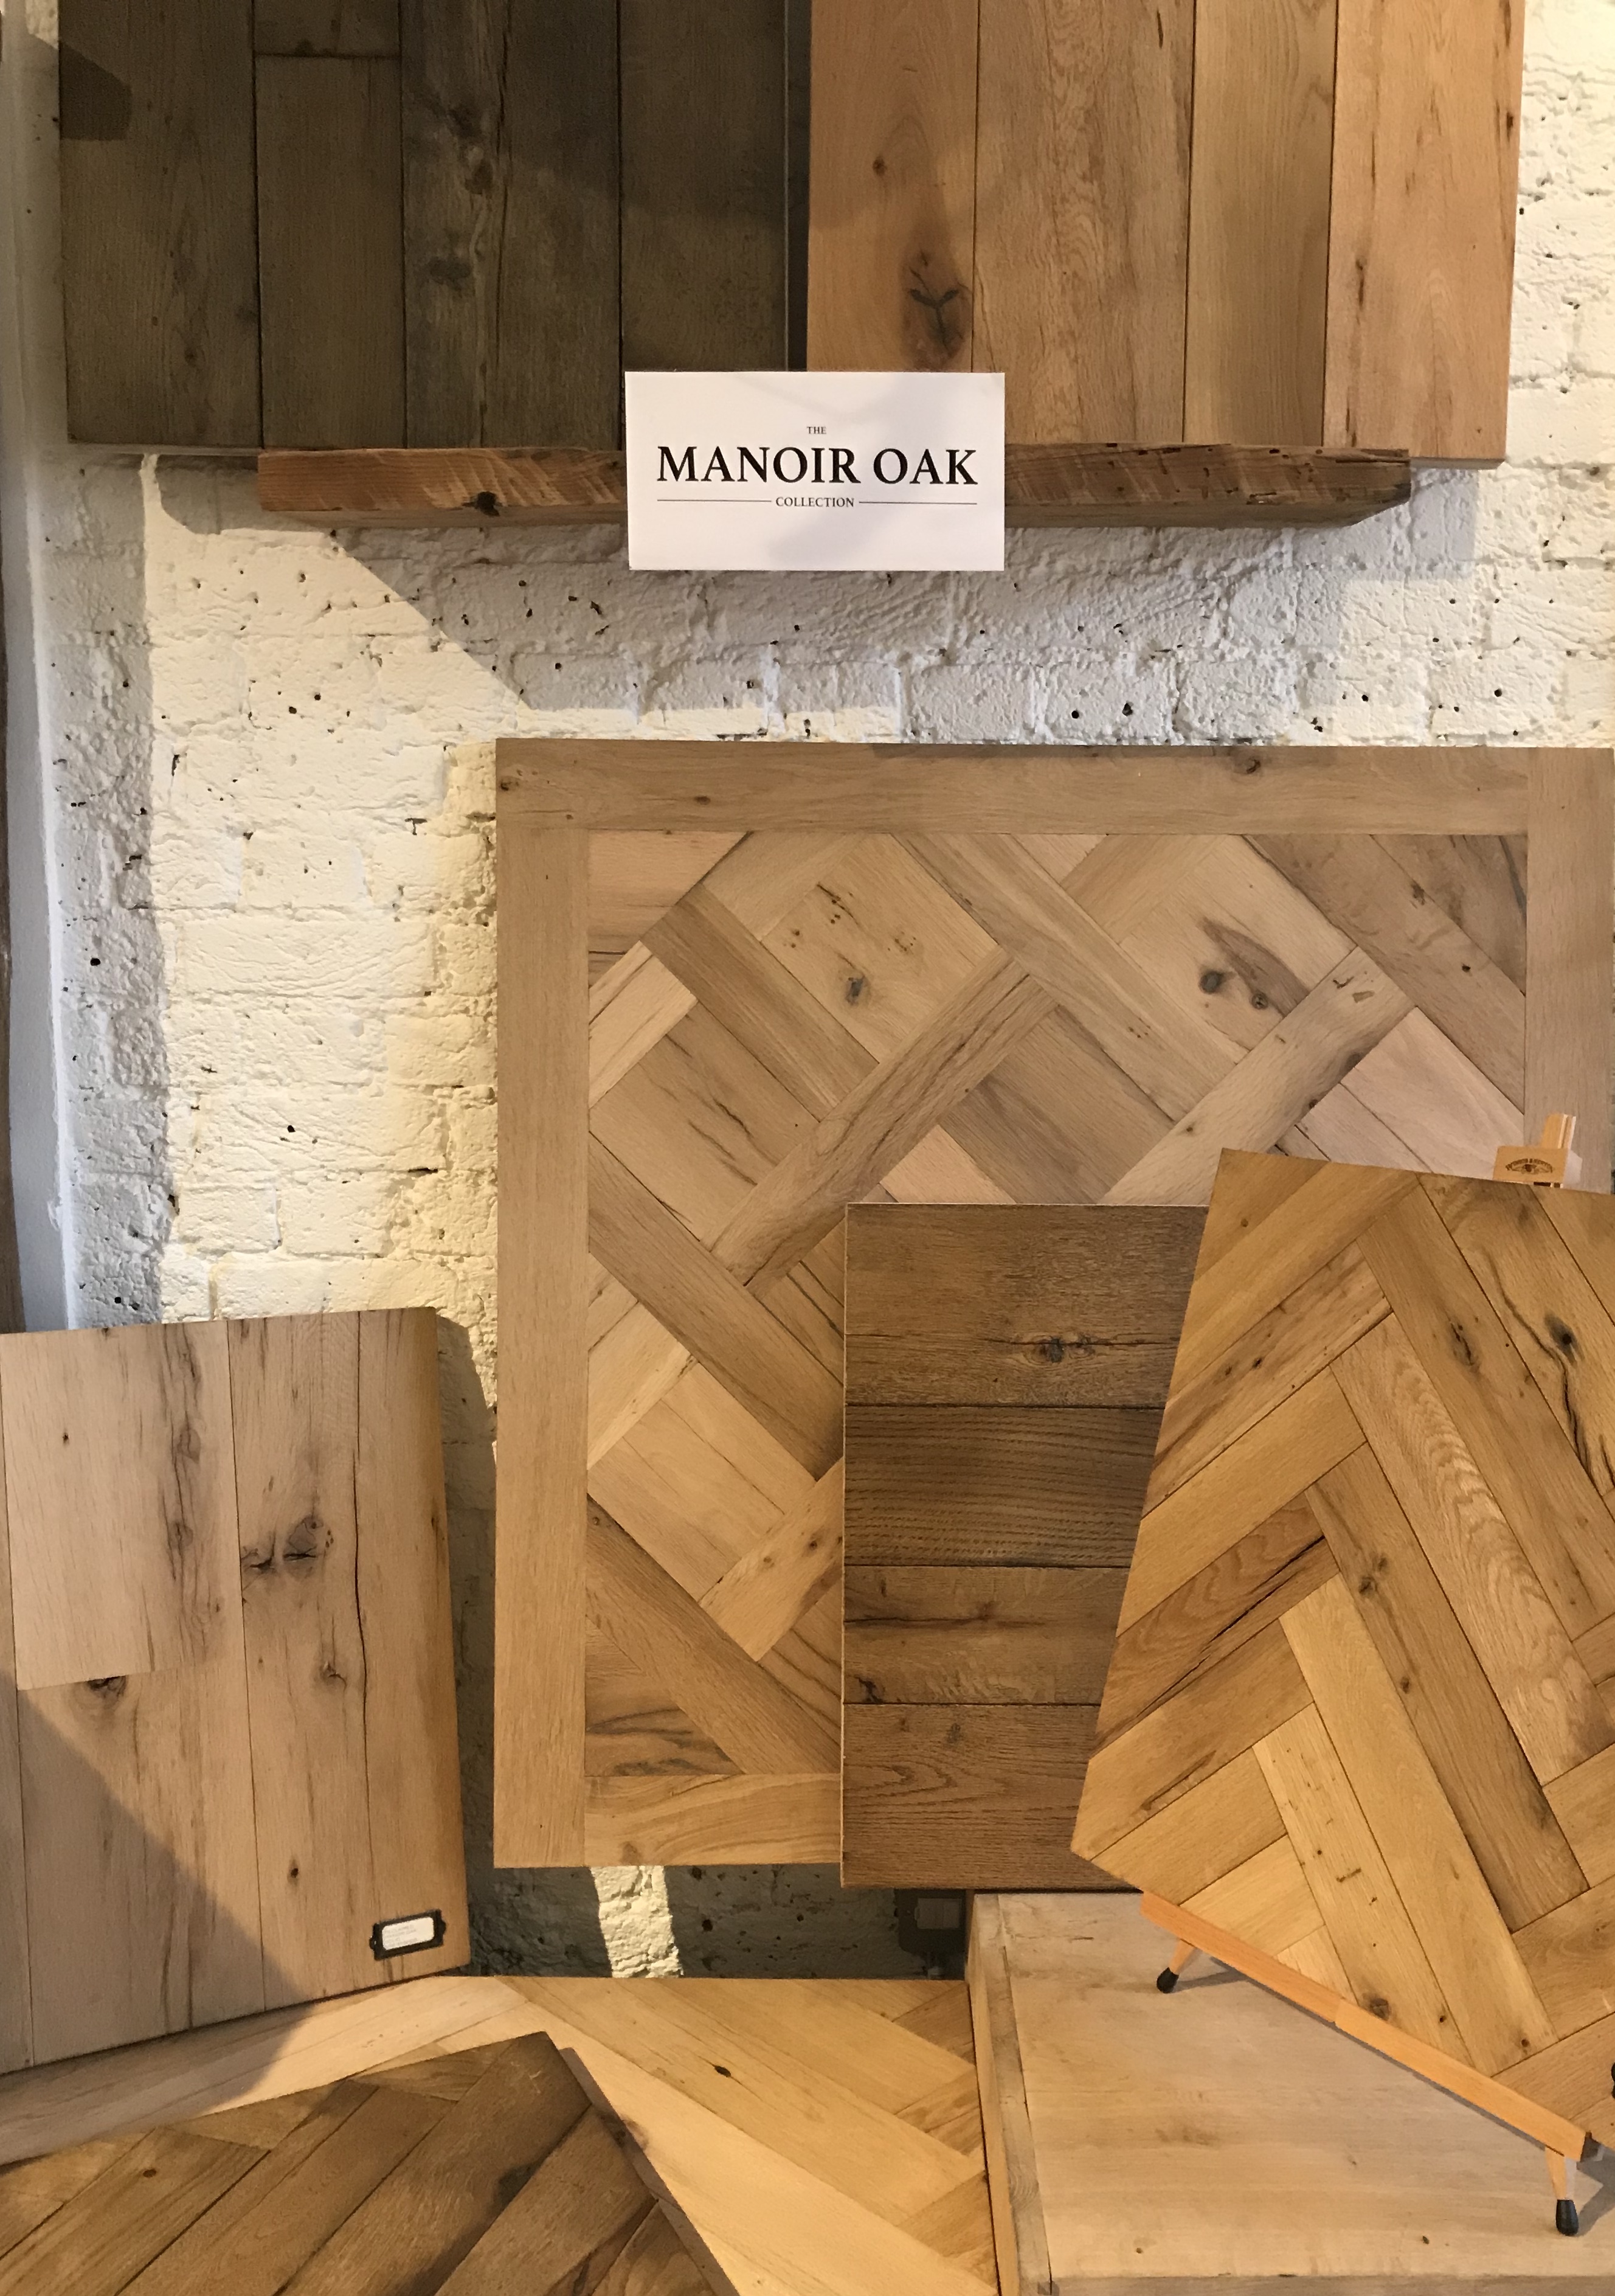 Manoir Oak Collection